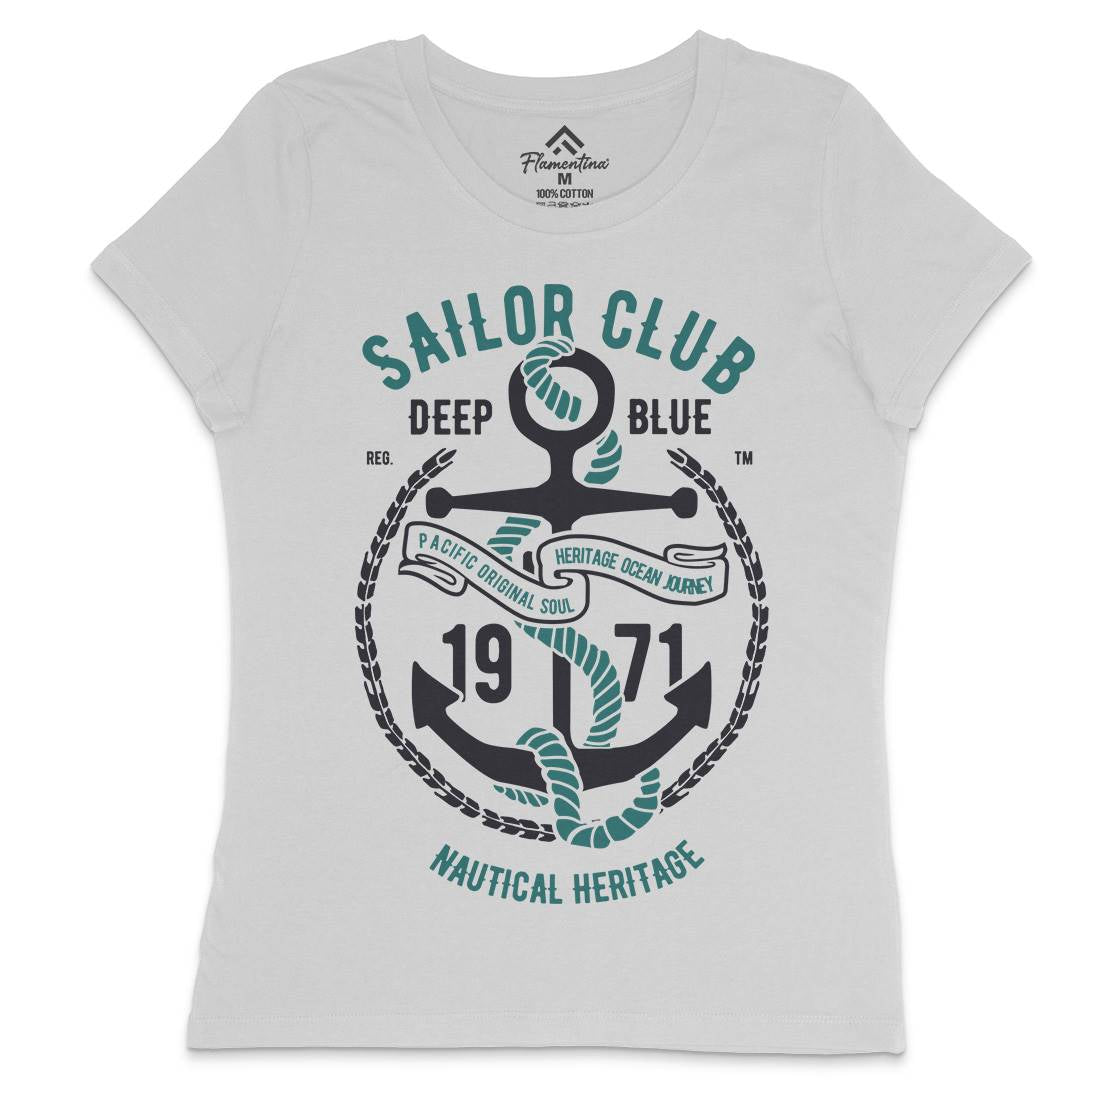 Sailor Club Womens Crew Neck T-Shirt Navy B445